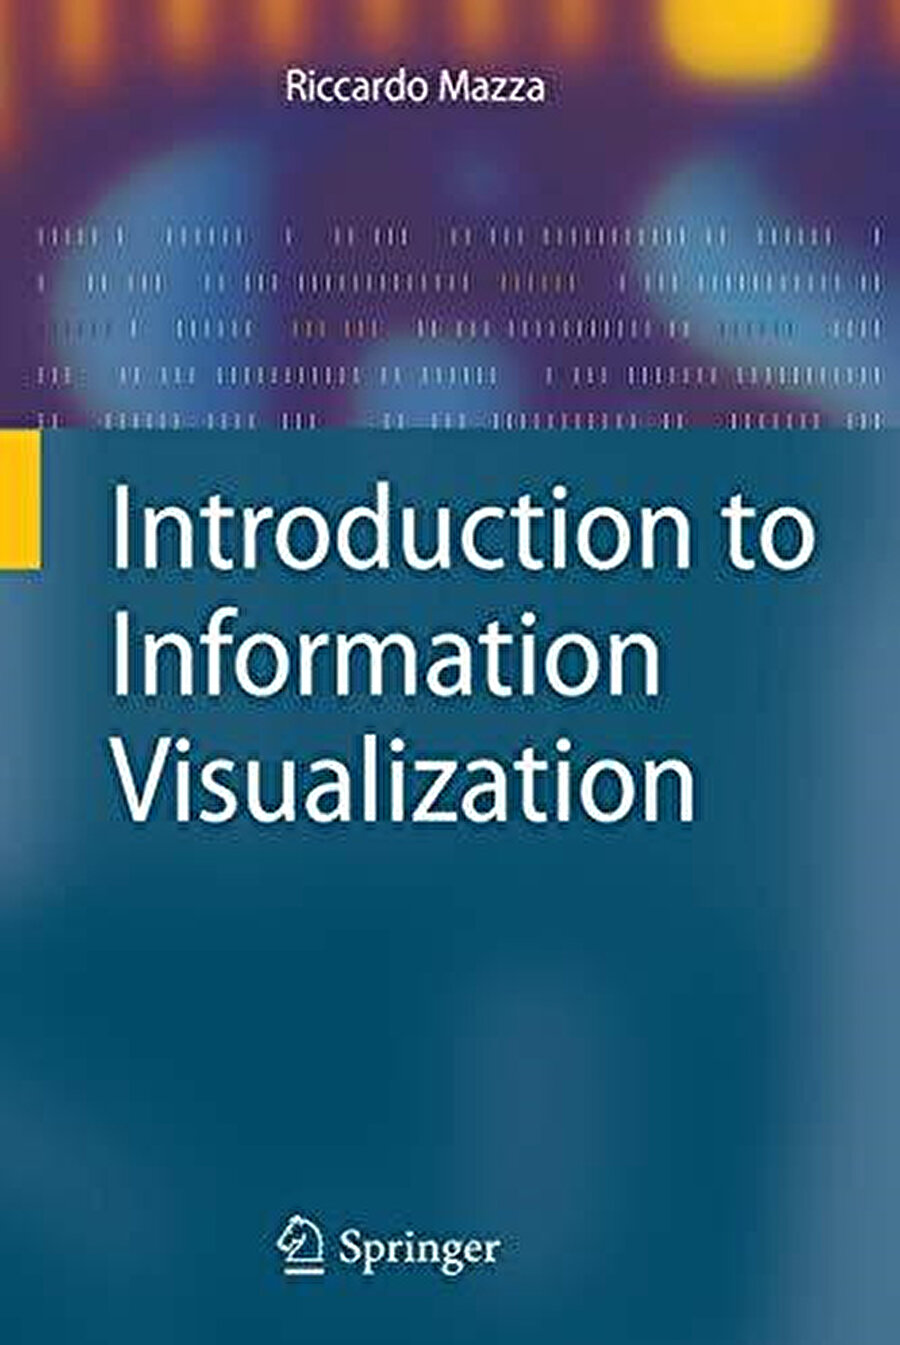 Ricardo Mazza, “Introduction to Information Visualization” kitabı.